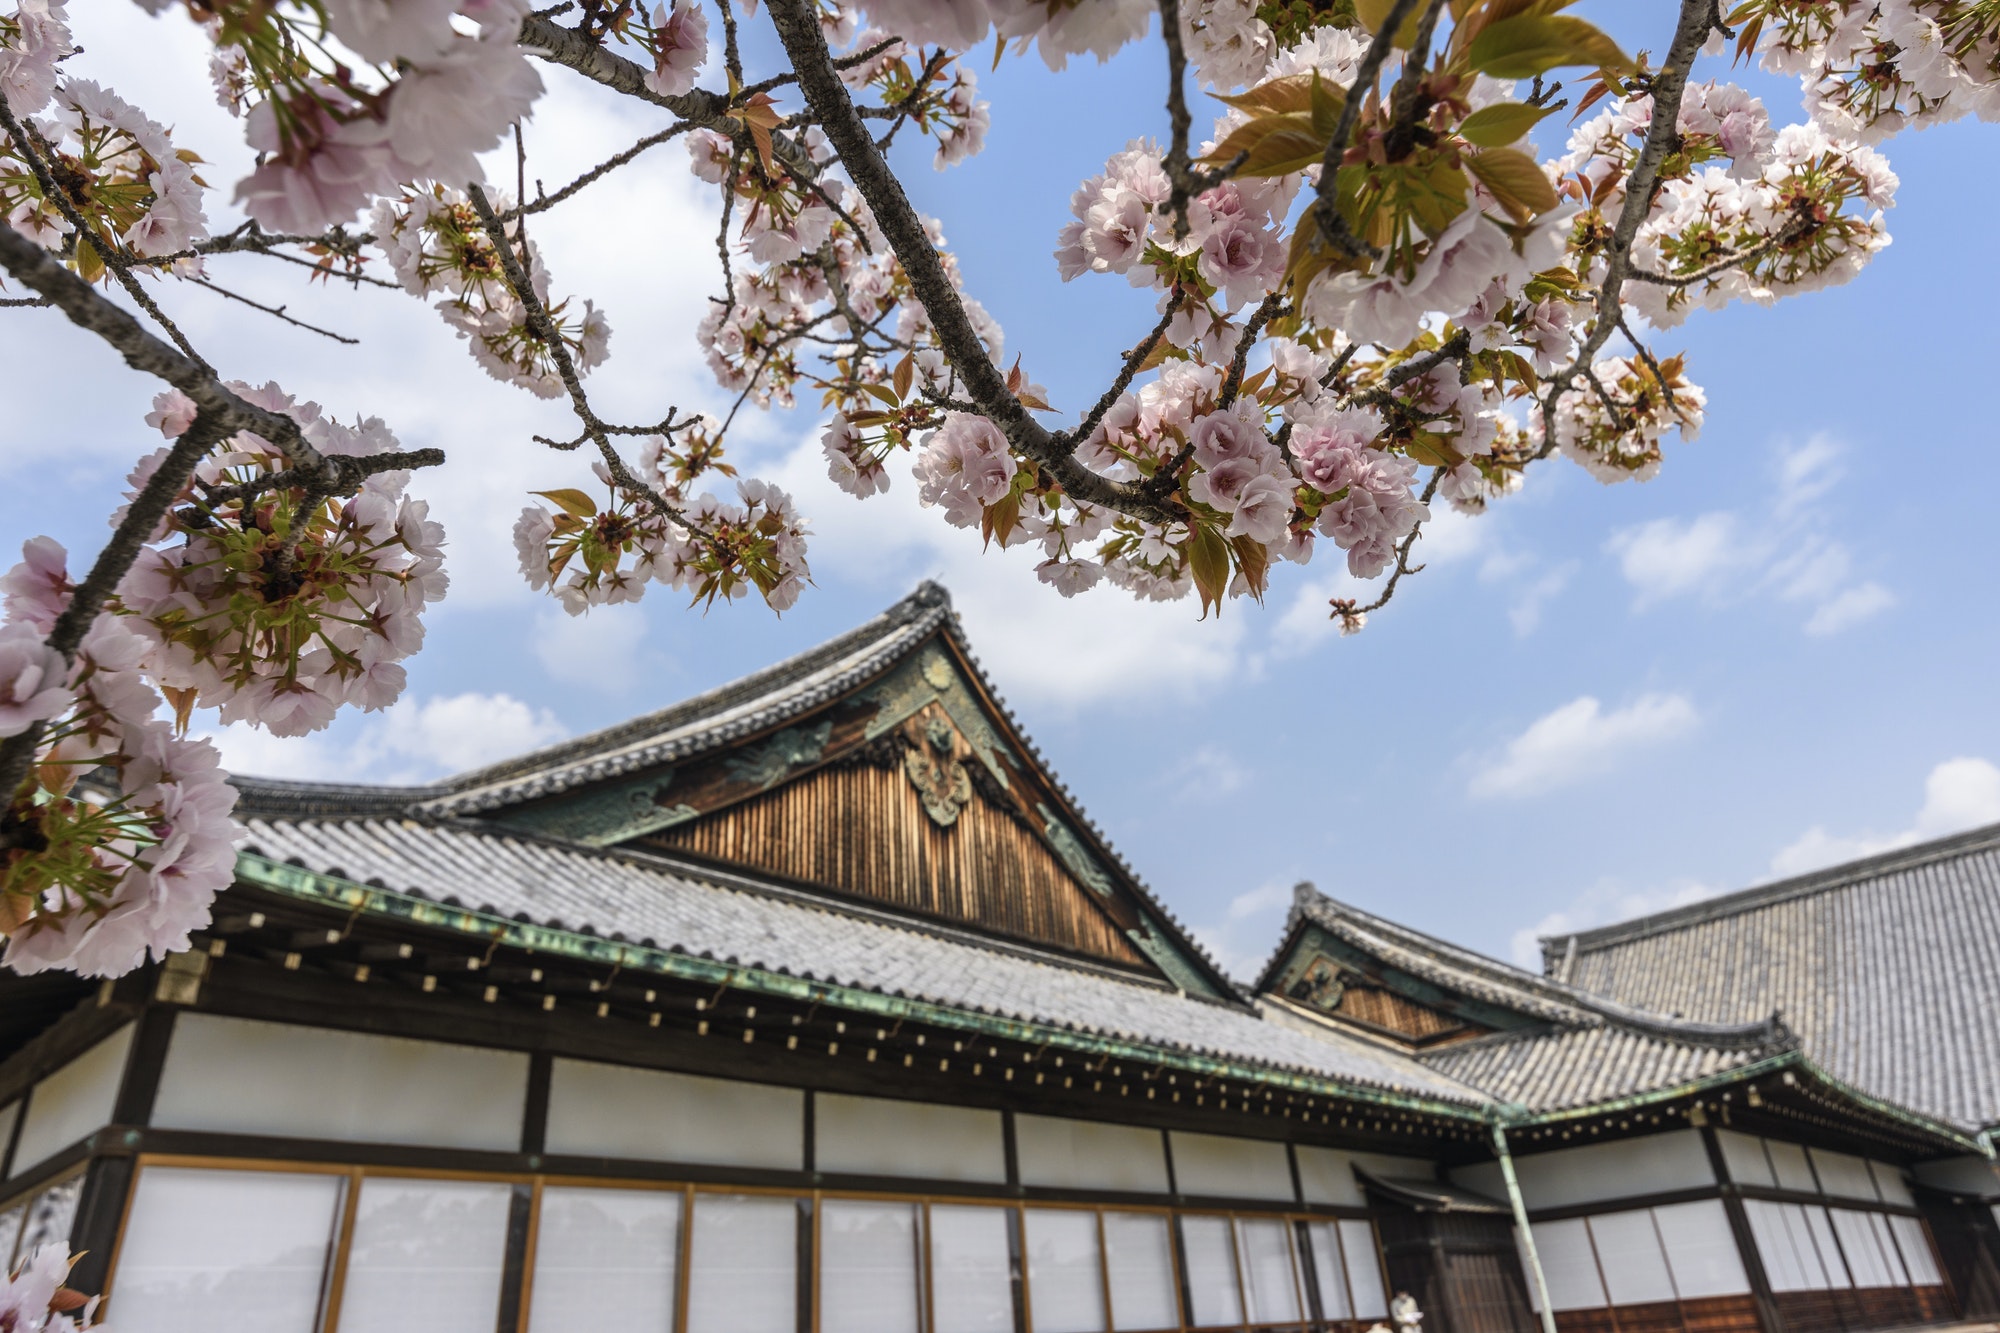 Cherry blossoms over Nijo-jo, a 17th century castle in Kyoto, Japan.